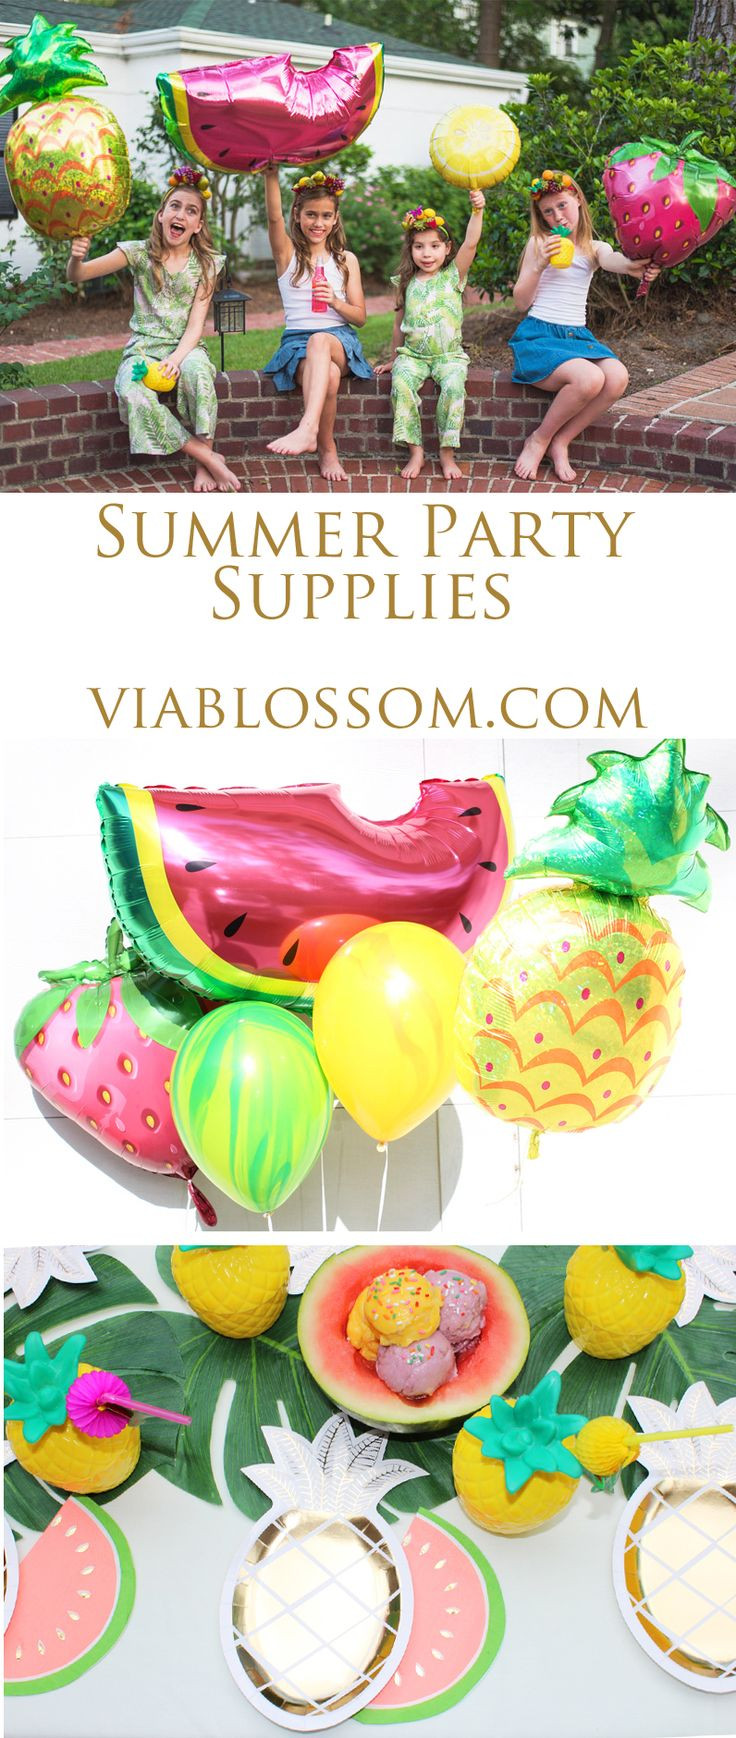 Summer Bday Party Ideas
 Best 20 Summer party themes ideas on Pinterest